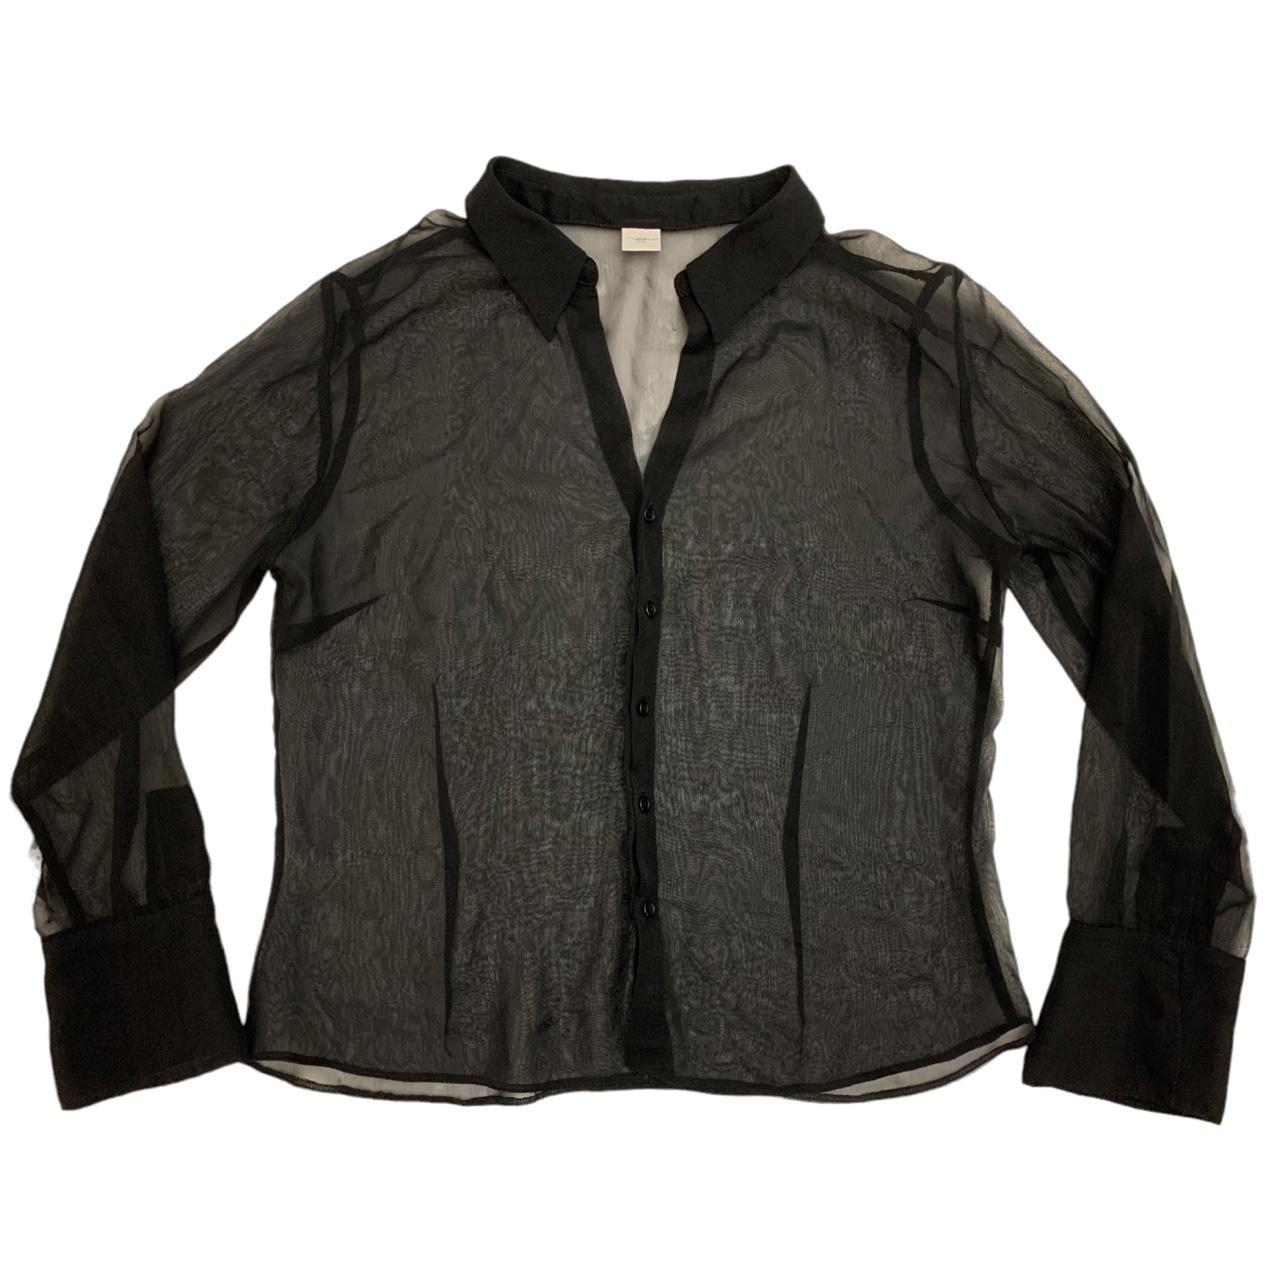 00s New Look black sheer chiffon style blouse top... - Depop